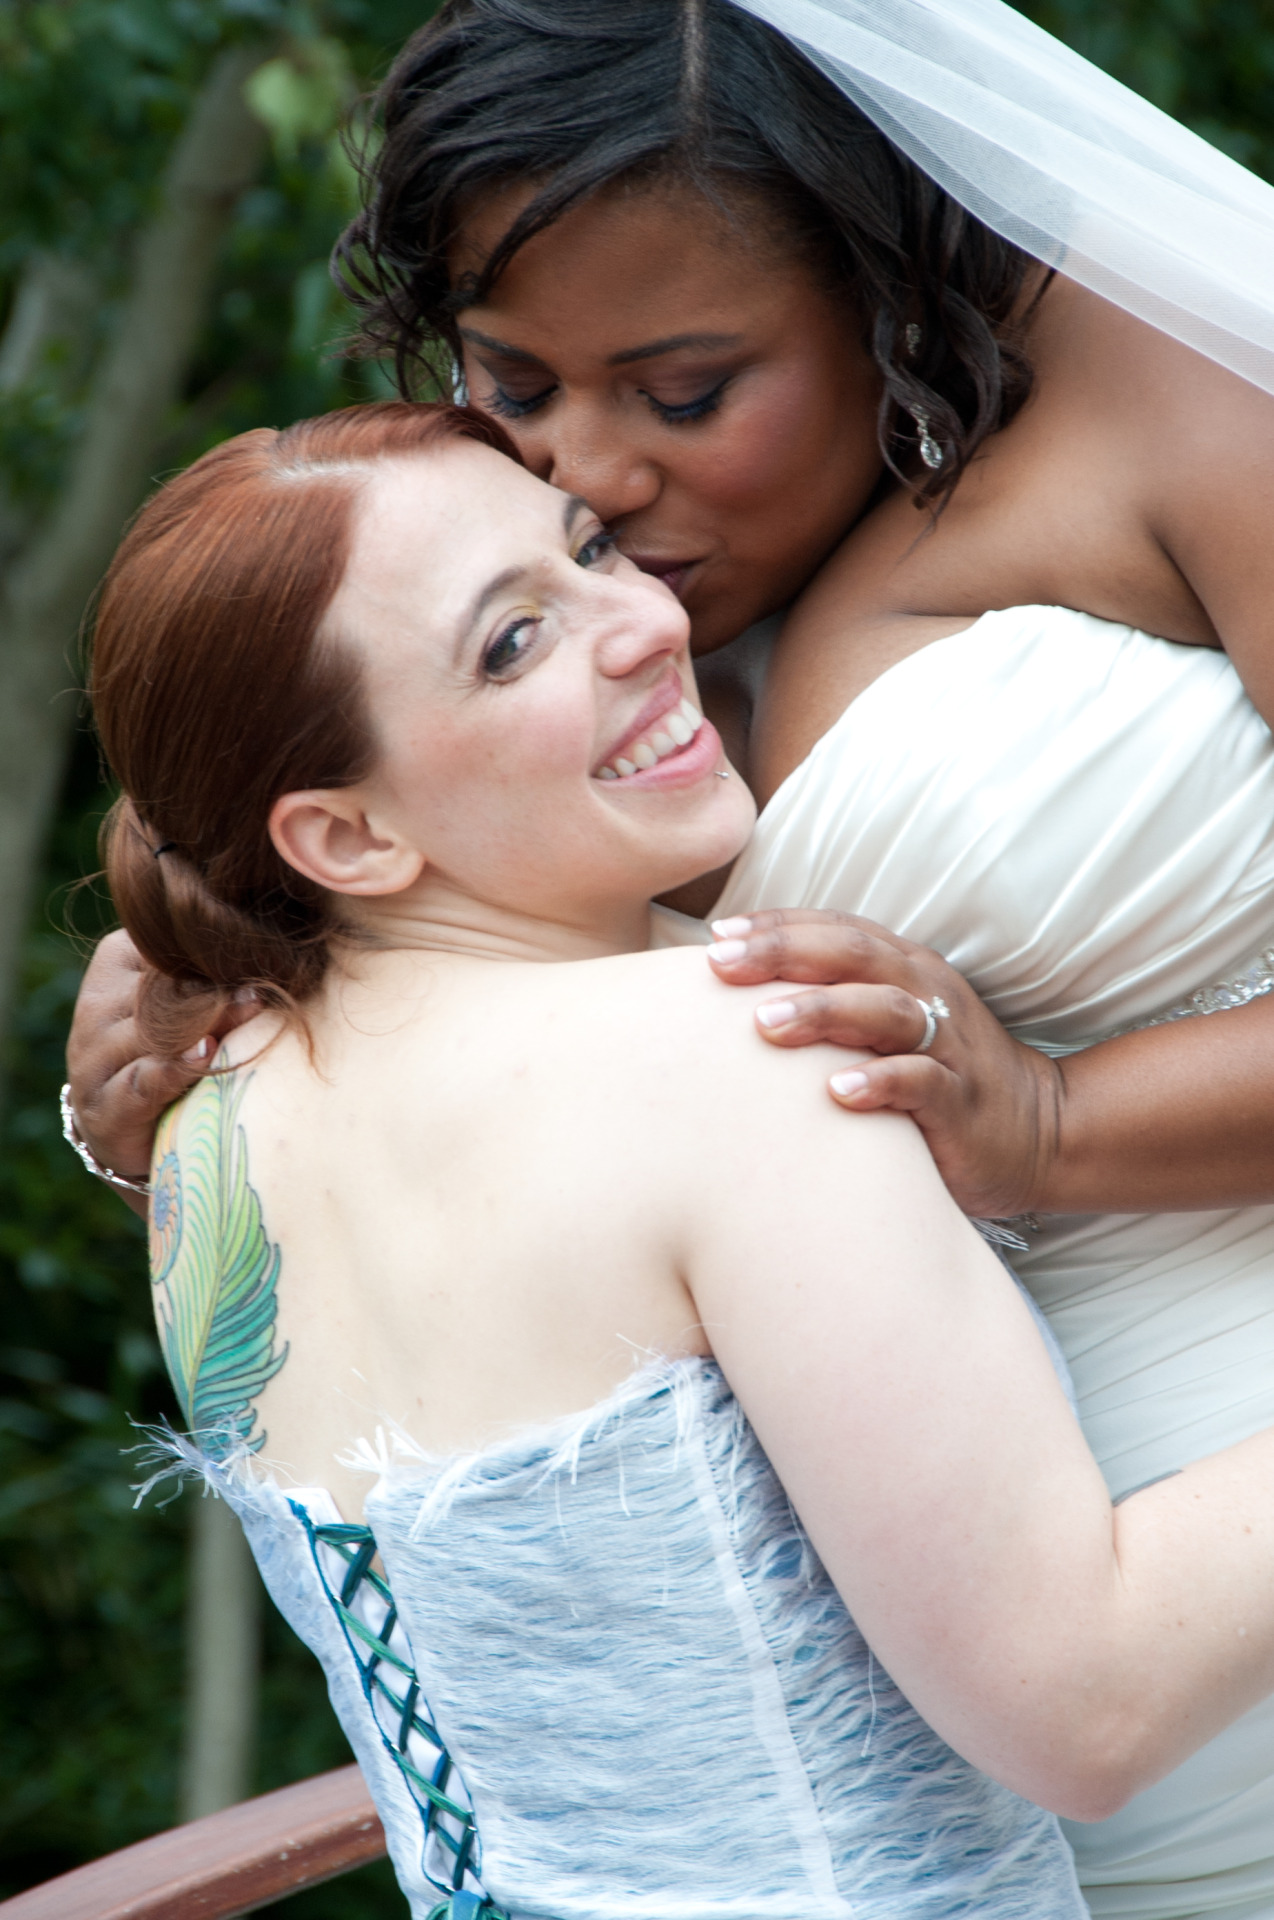 weddingprideny:  A New York lesbian couples has a peacock-themed wedding. Read their